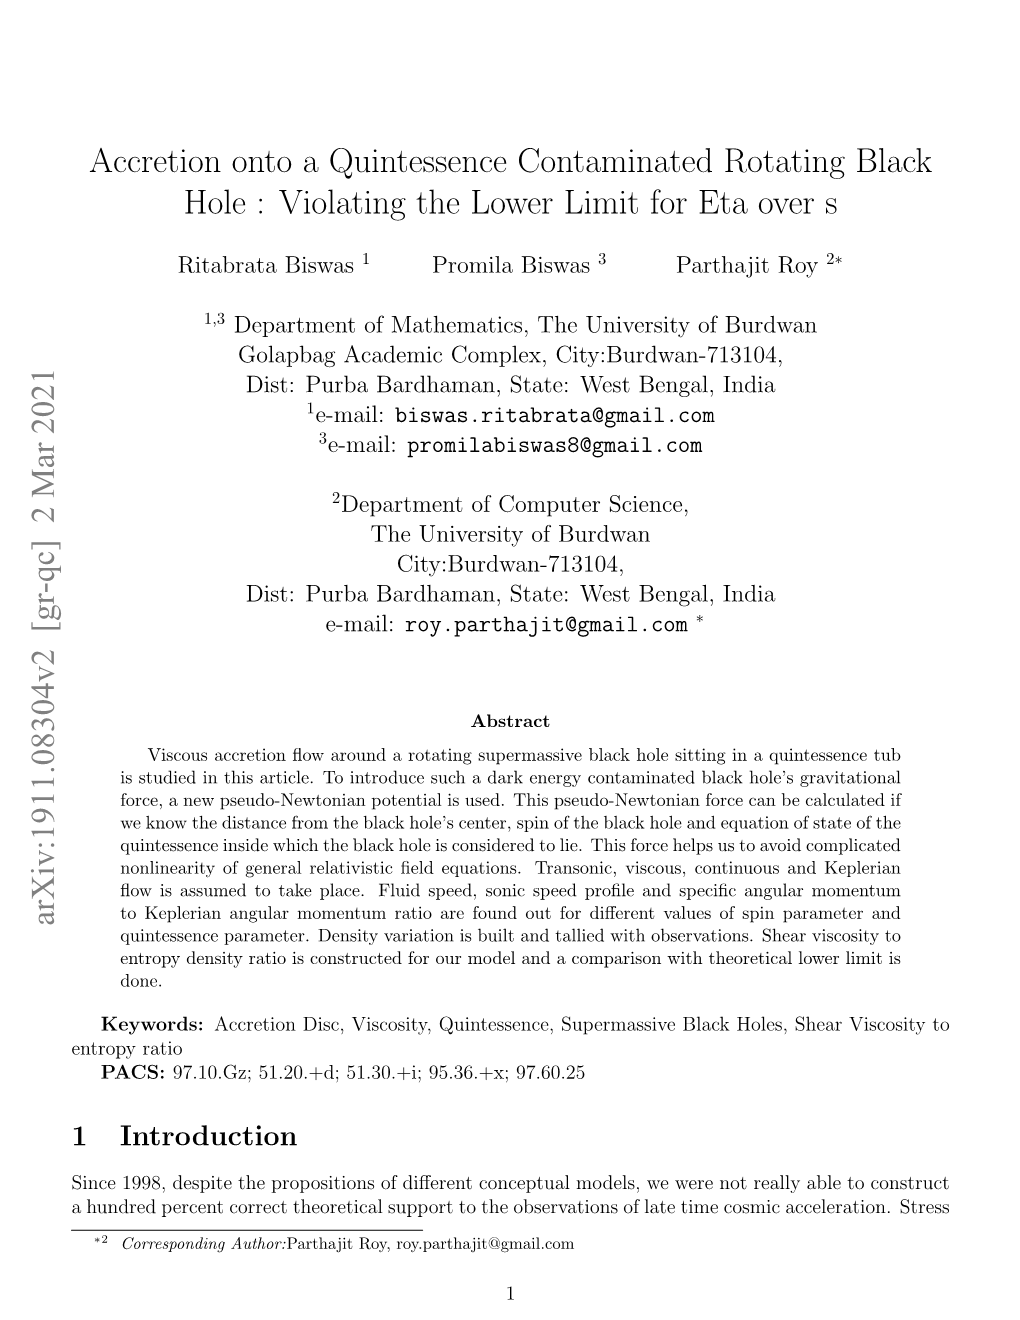 Accretion Onto a Quintessence Contaminated Rotating Black Hole : Violating the Lower Limit for Eta Over S Arxiv:1911.08304V2 [G